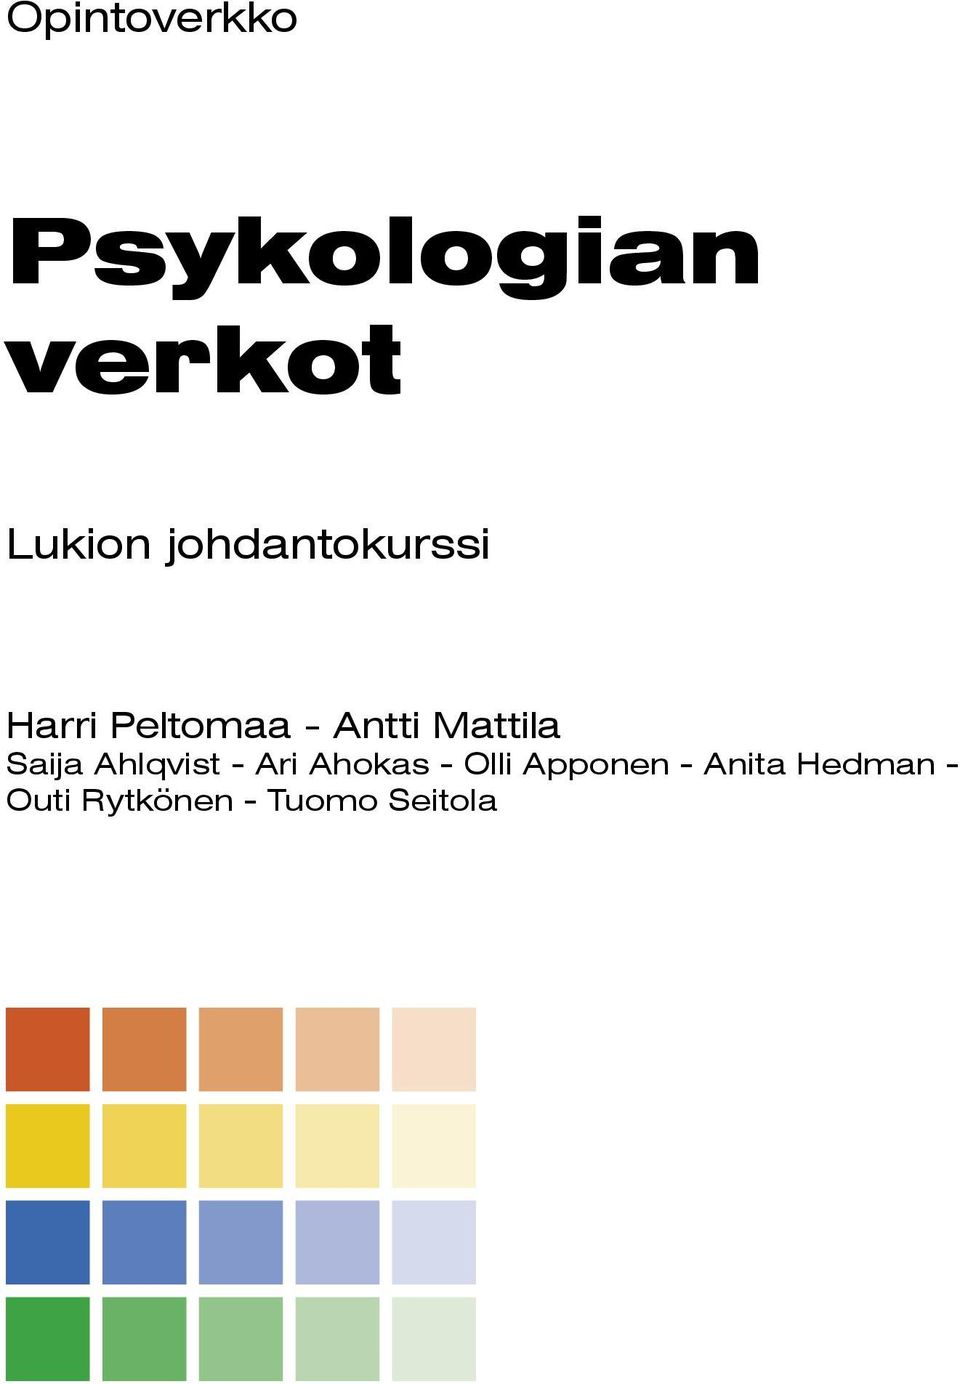 Mattila Saija Ahlqvist - Ari Ahokas -